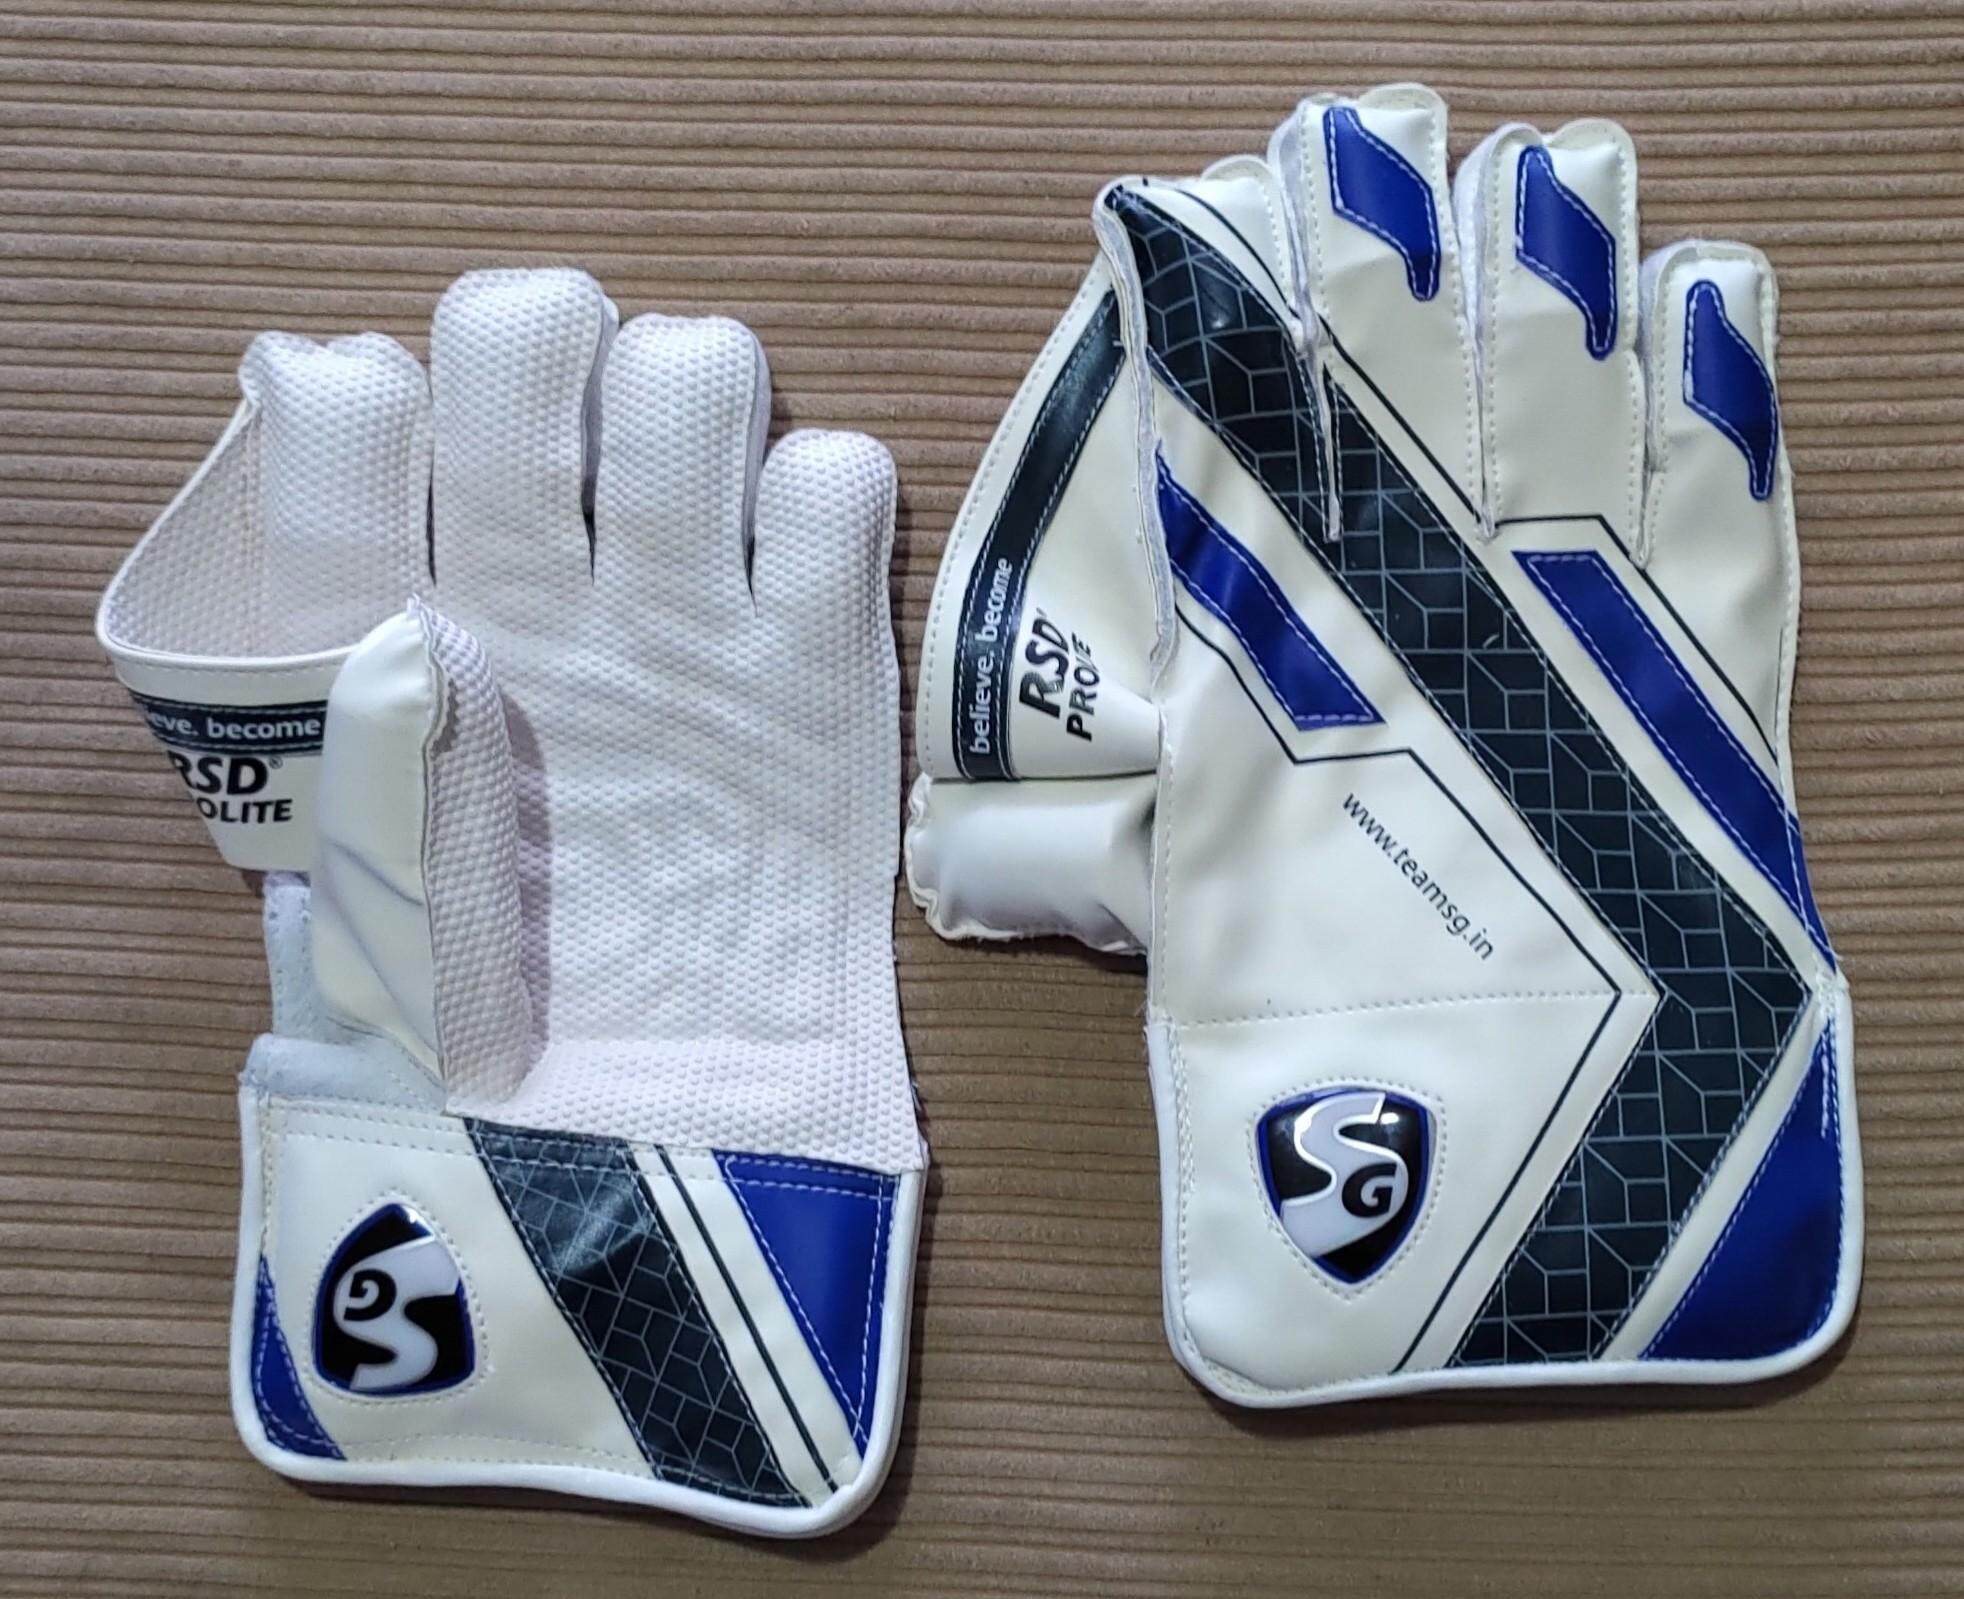 RSD Prolite SG Wicket Keeping Gloves 